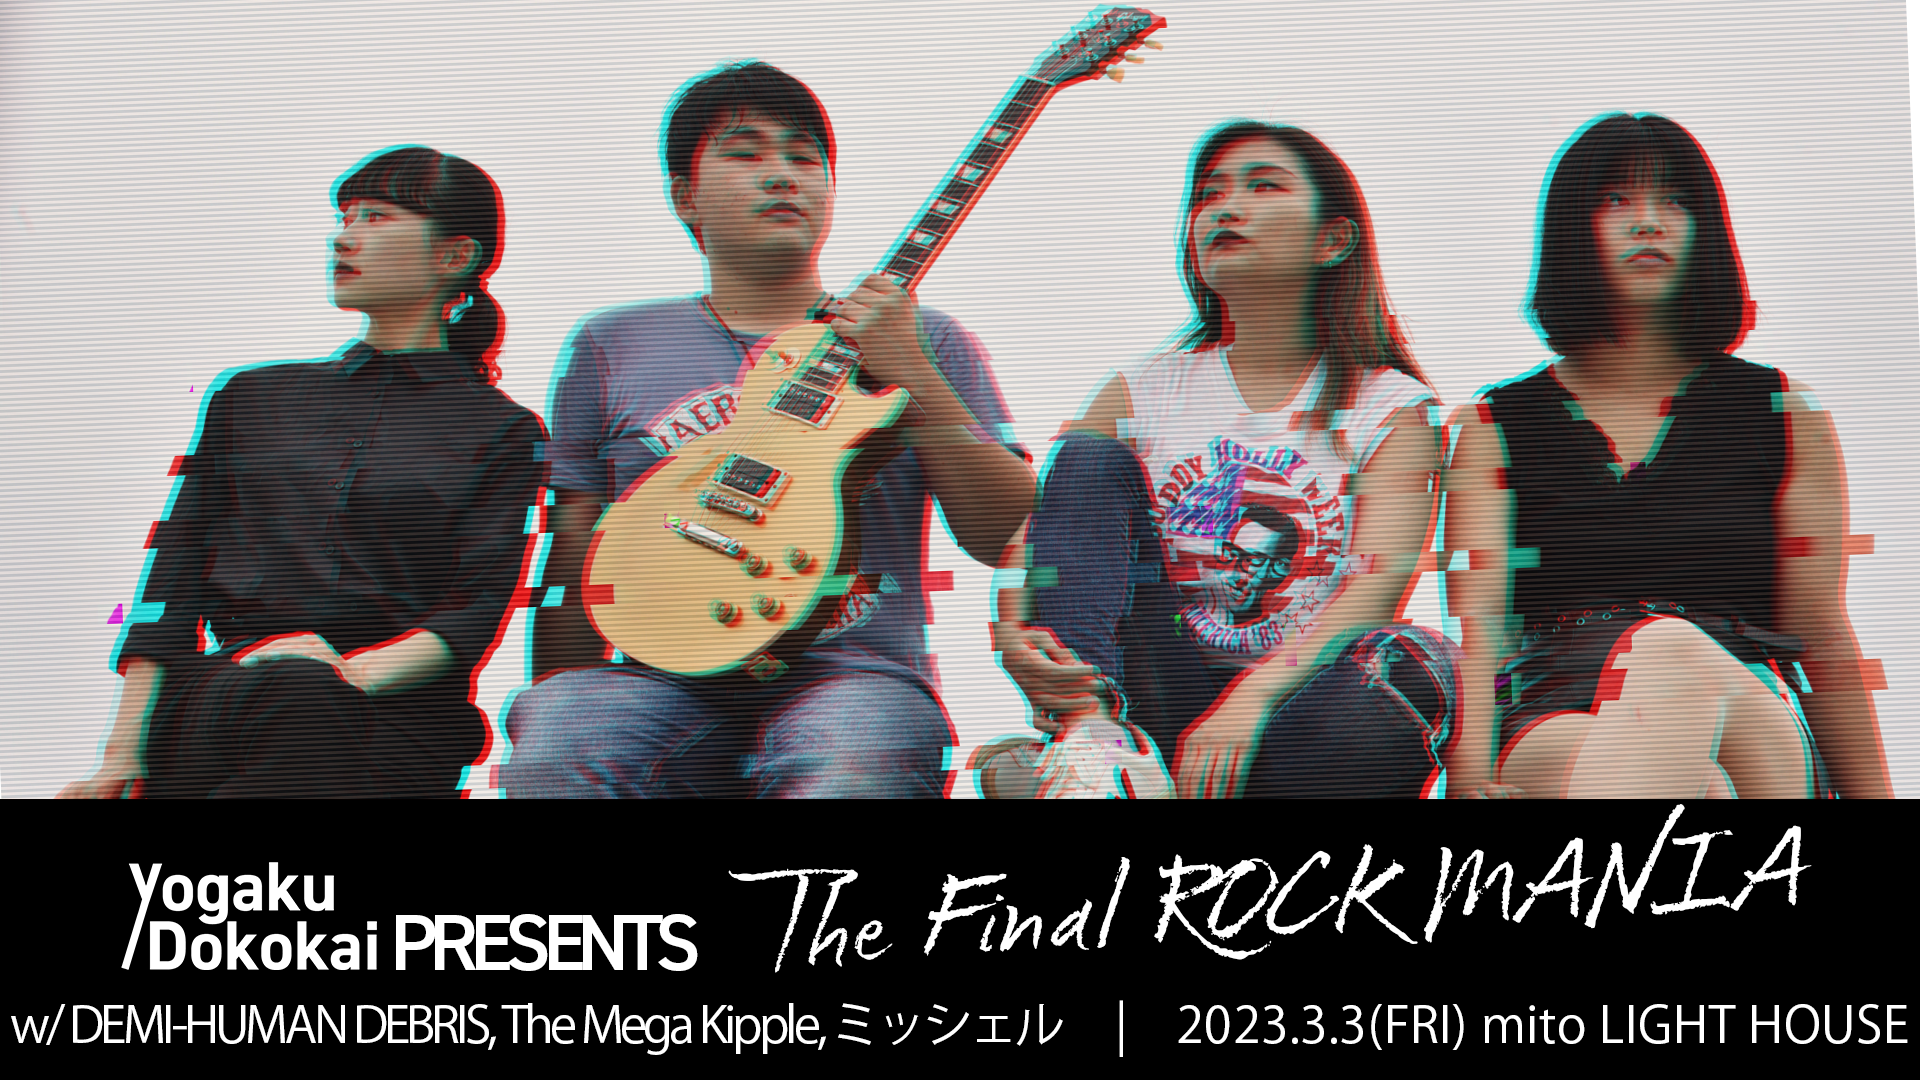 Yogaku Dokokai presents The Final ROCK MANIAが開催決定